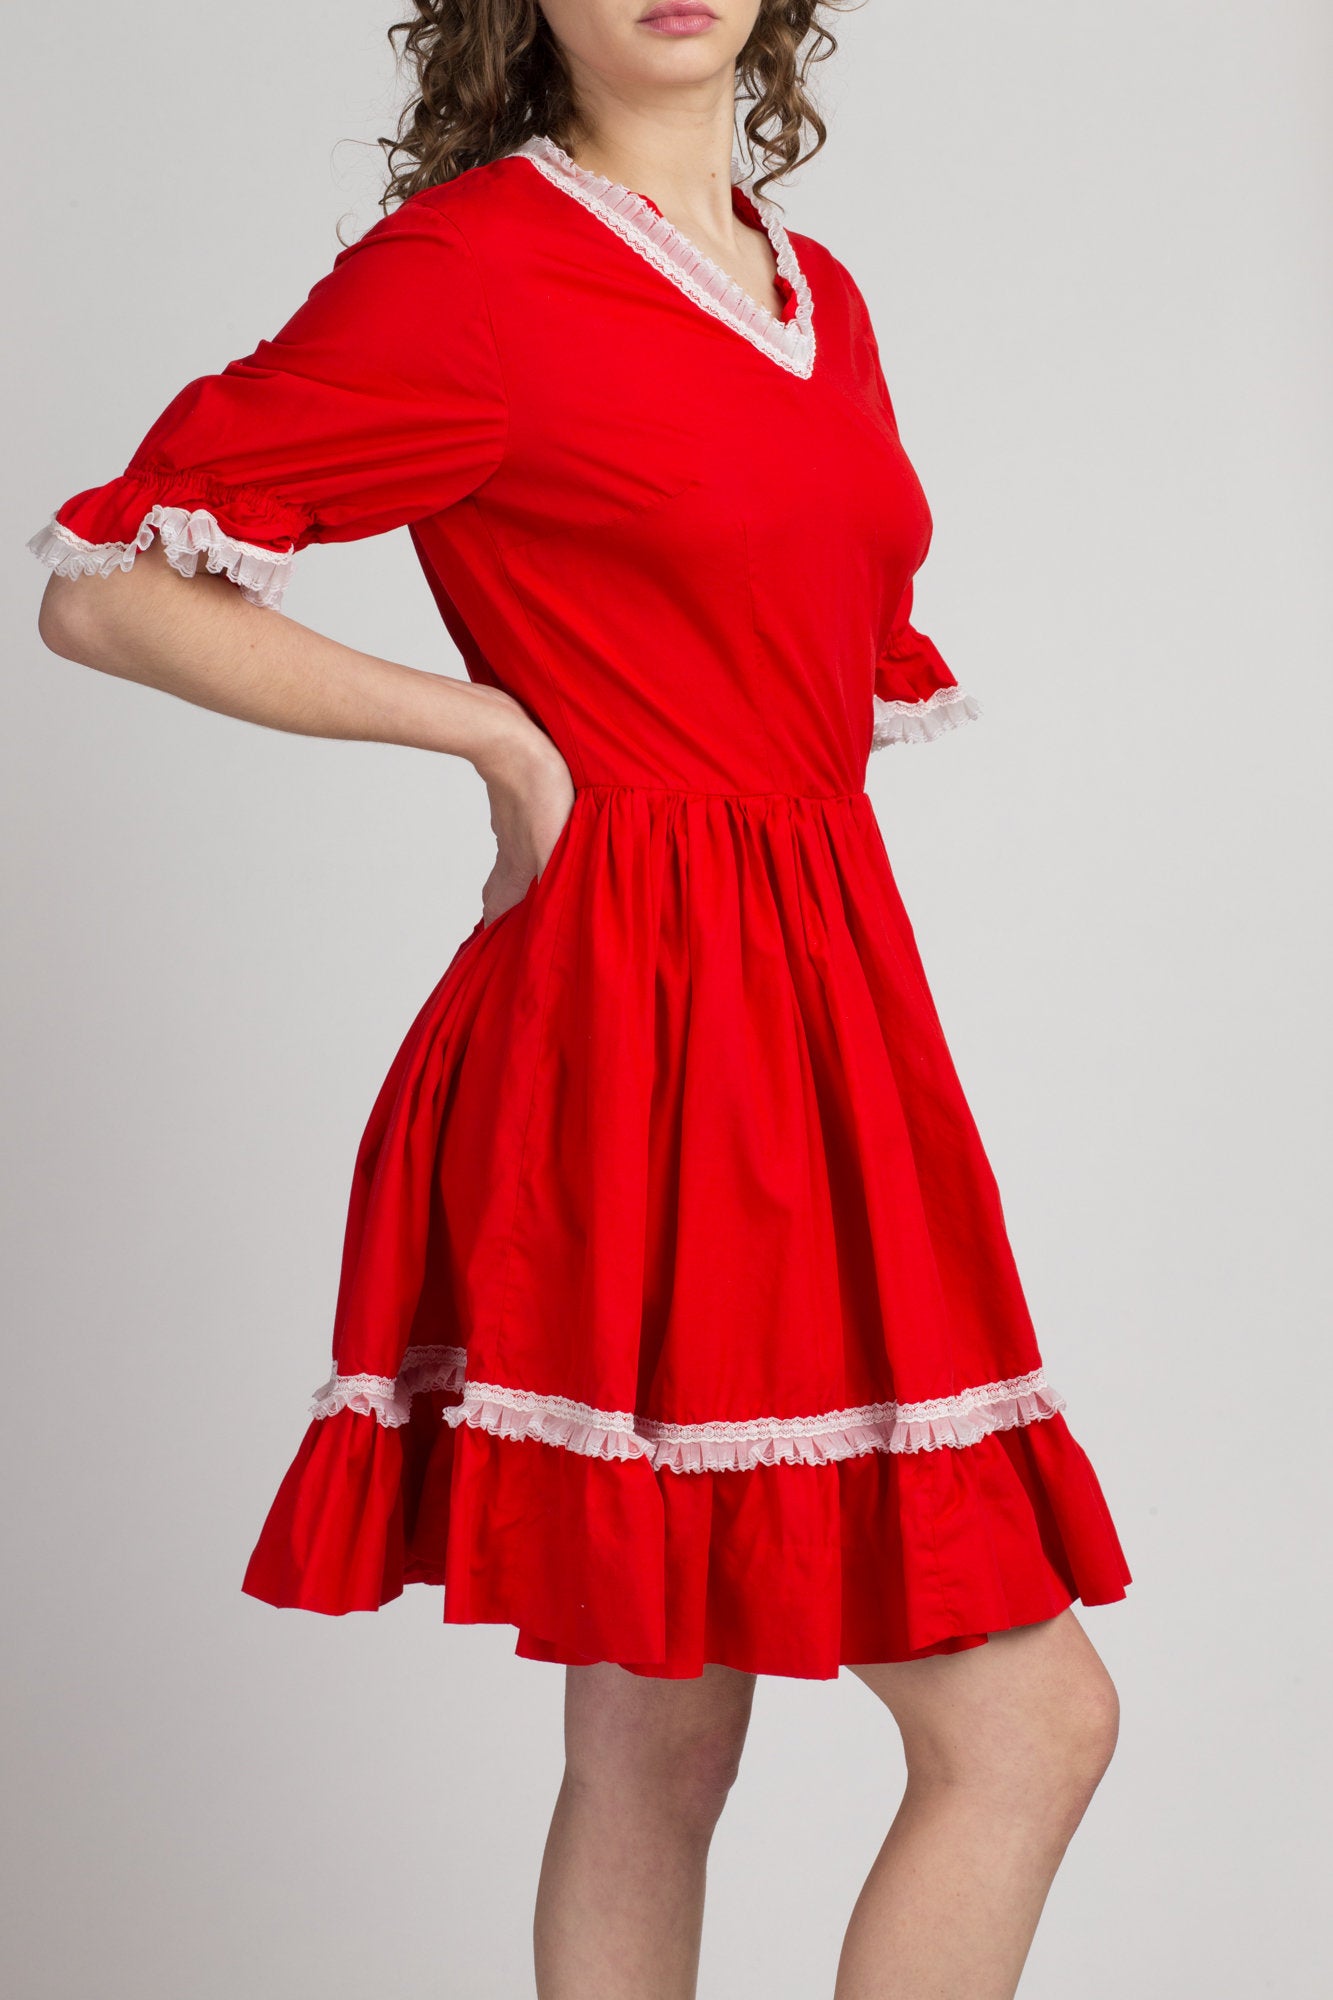 Vintage 70s Red White Polka Dot Cotton Dress. Rockabilly 